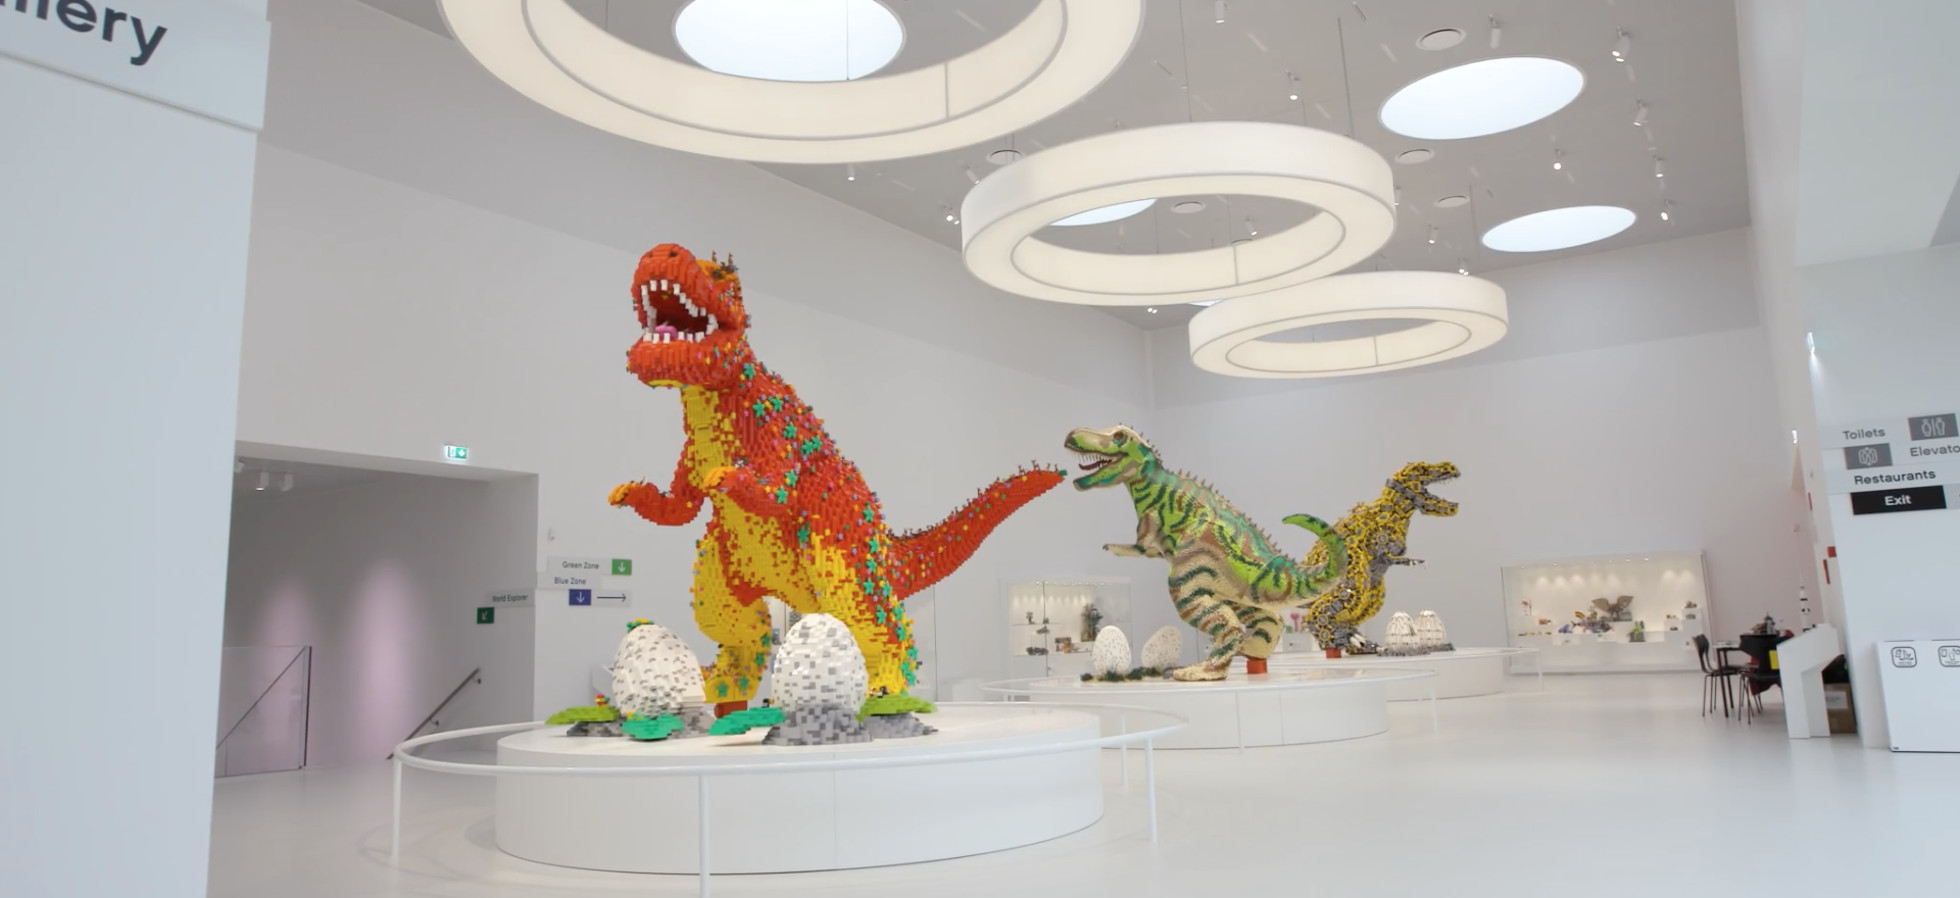 Dinosaures fets de peces de Lego